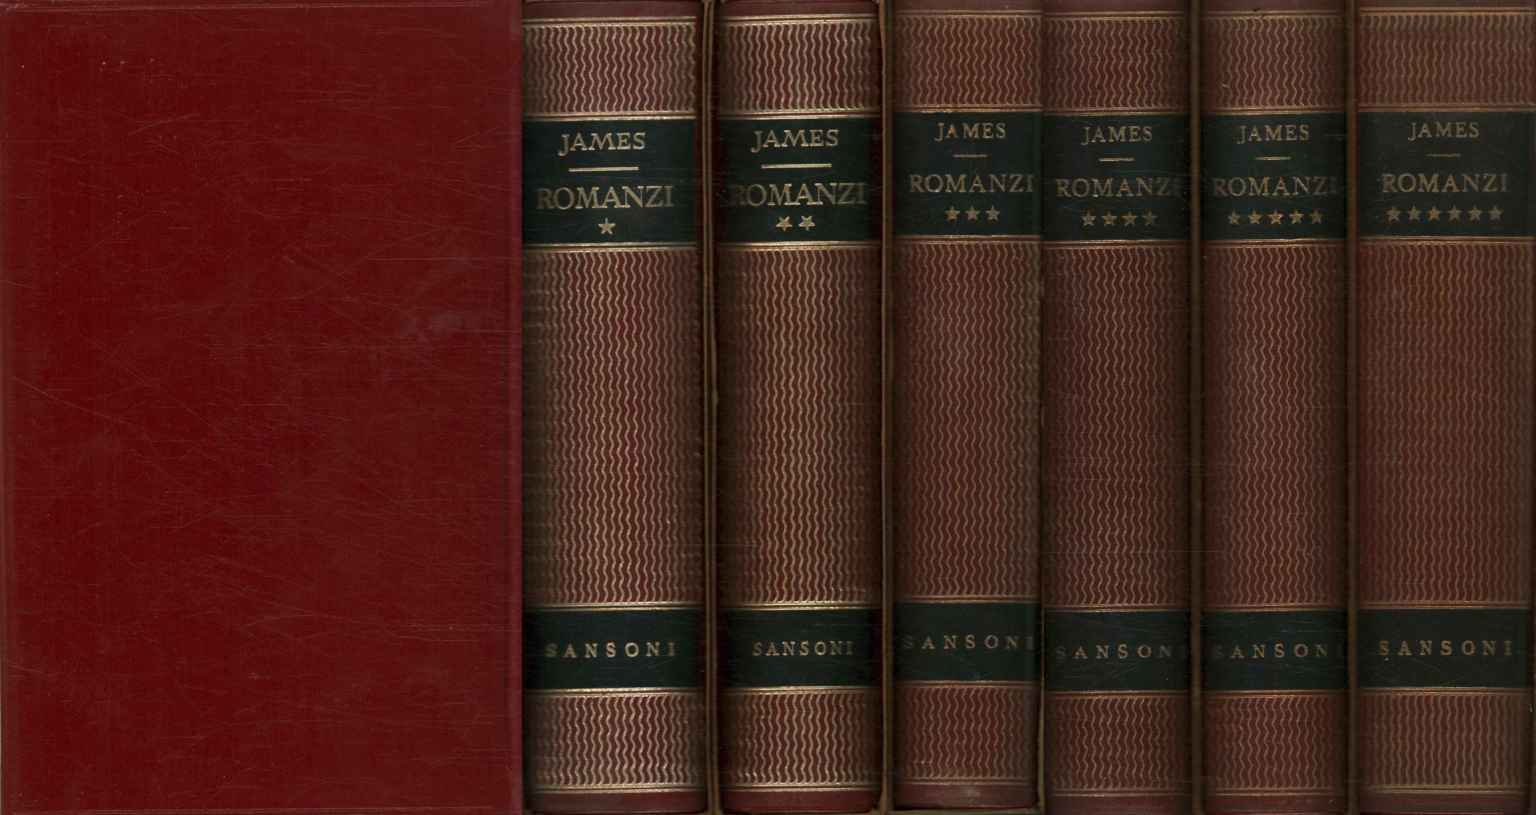 Romans (6 volumes)